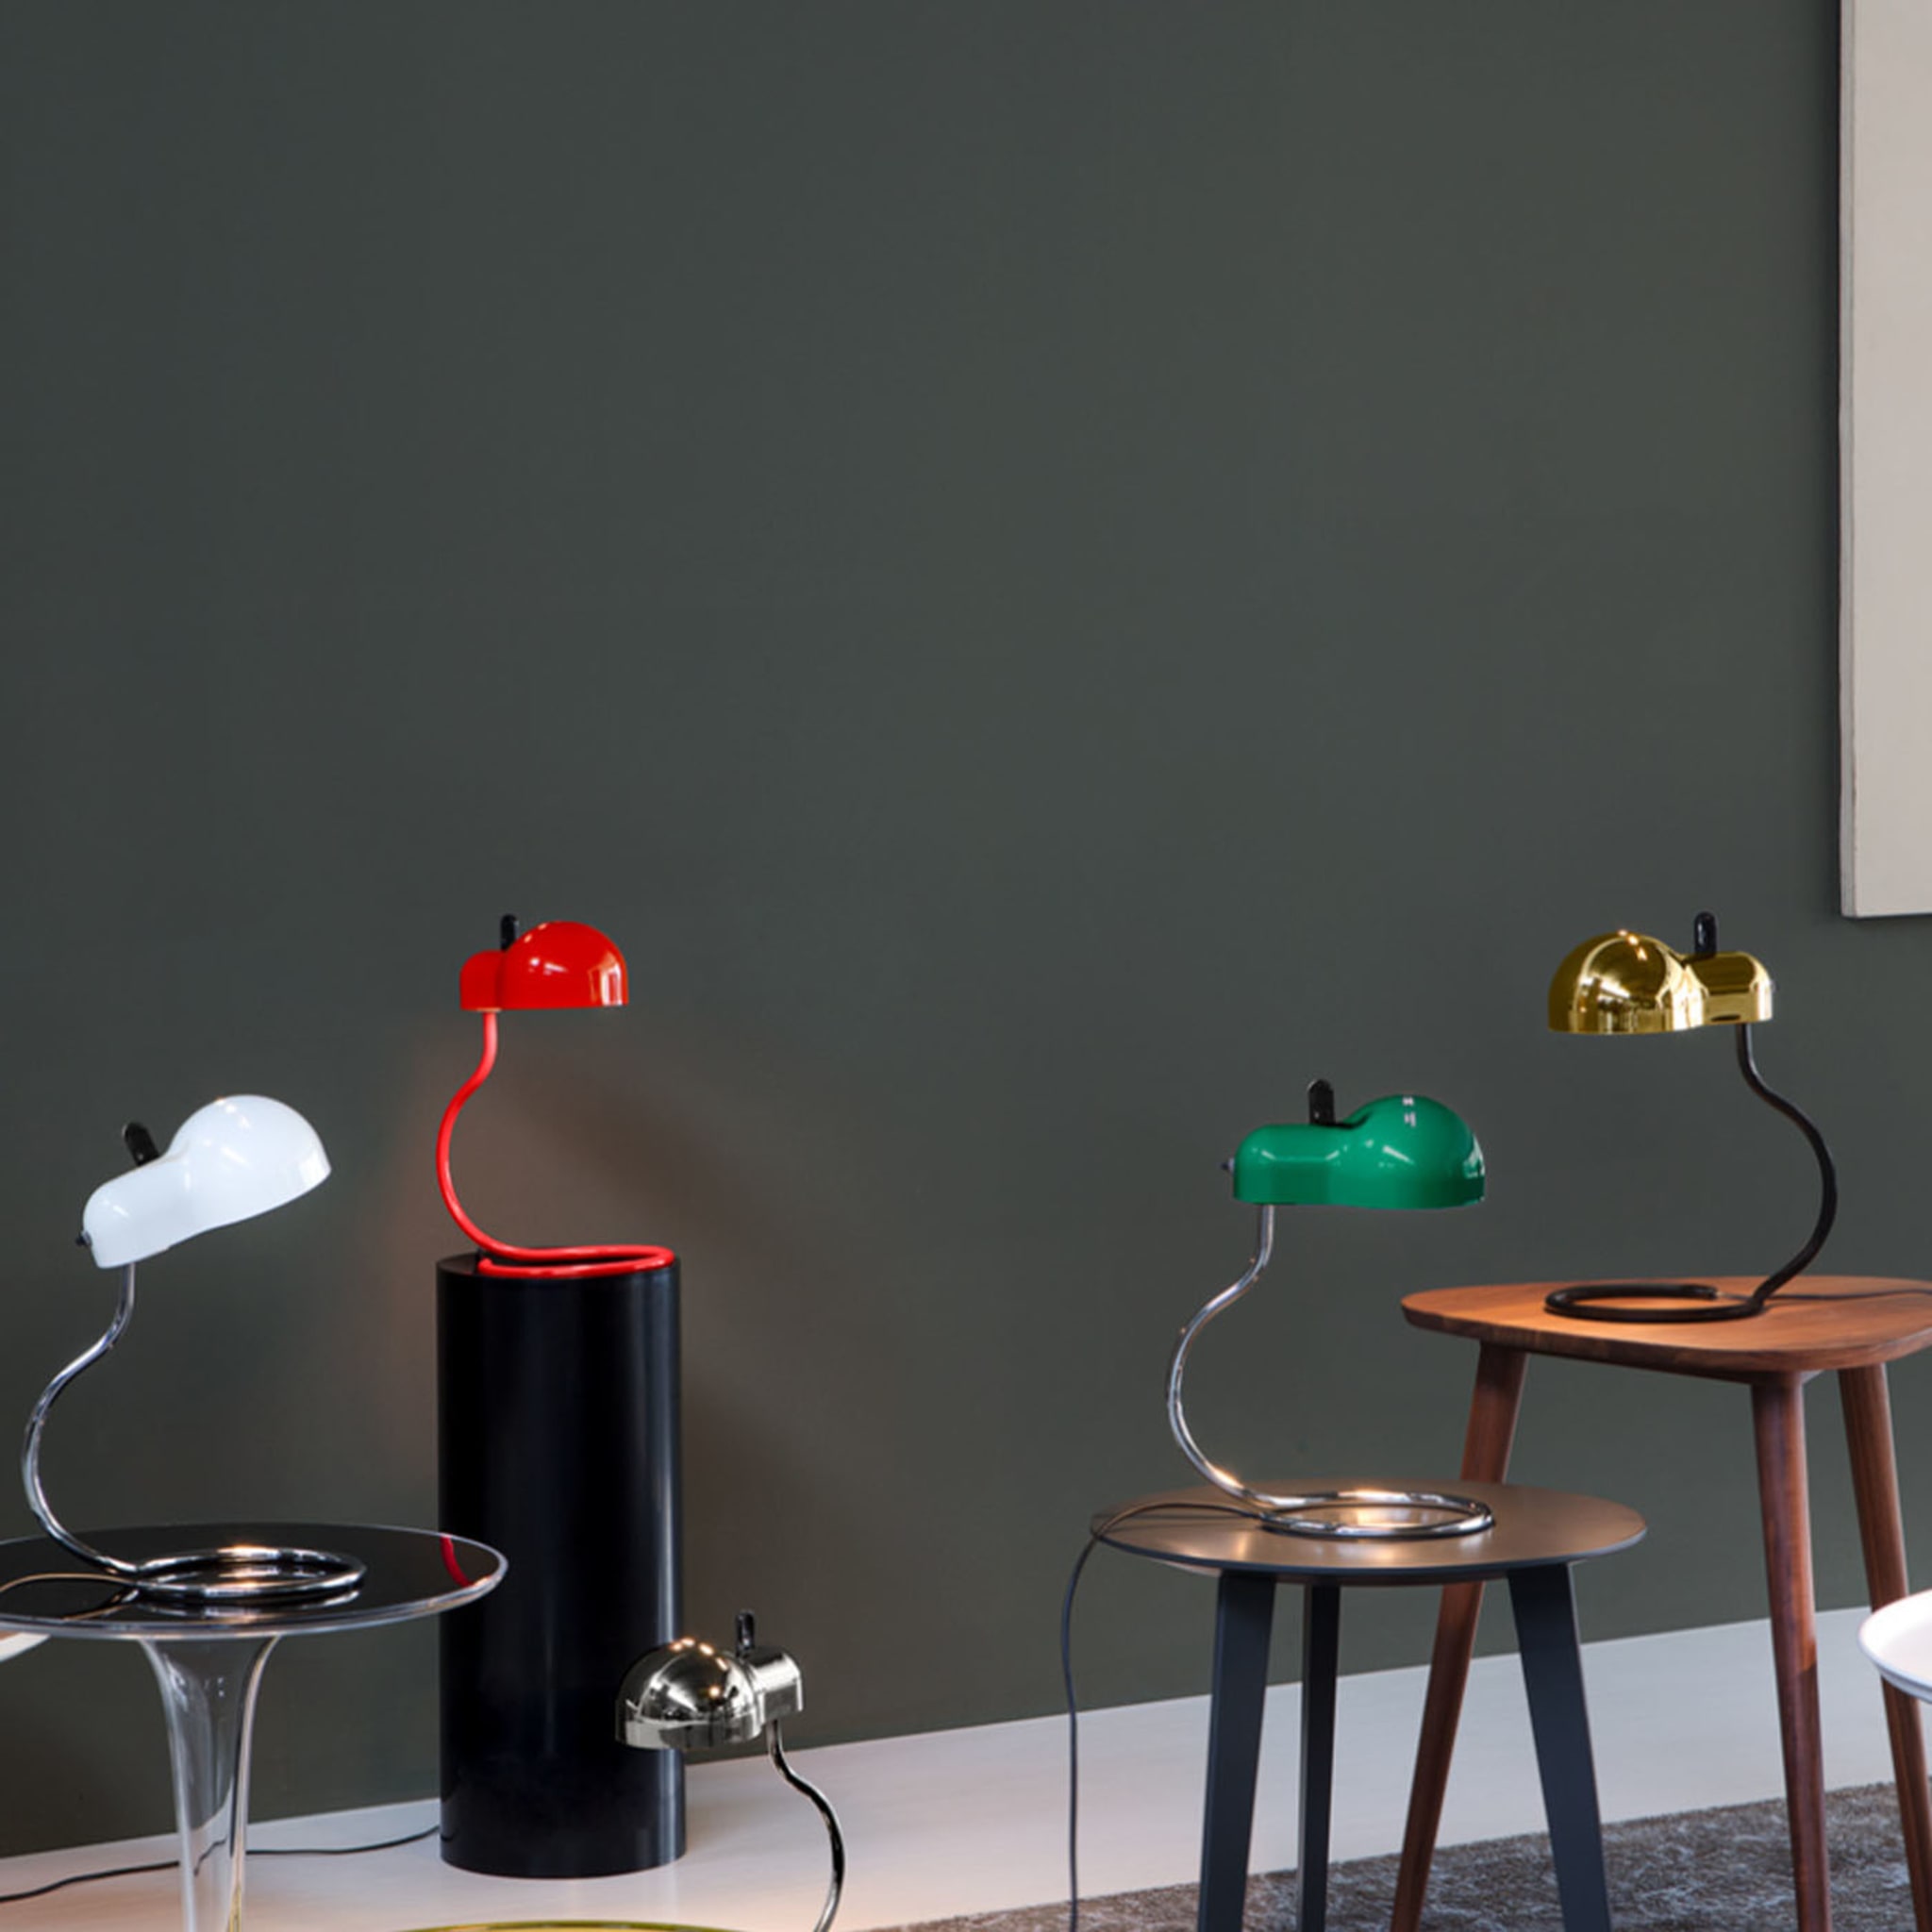 MiniTopo Green Table Lamp designed by Joe Colombo - Alternative view 2